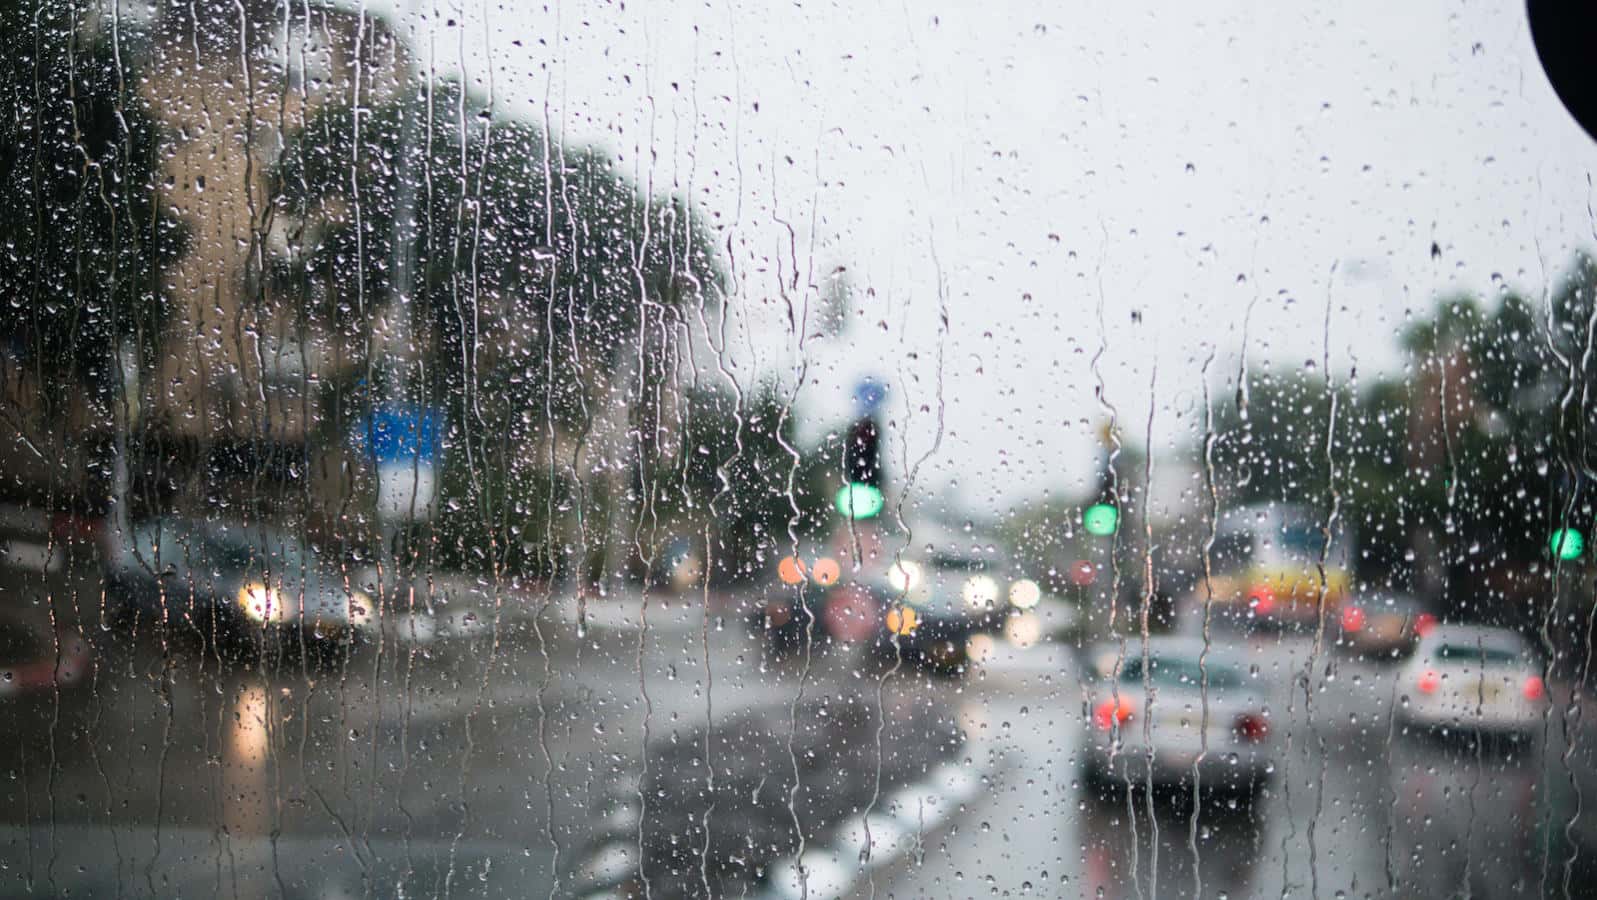 blurred-street-scene-through-car-windows-with-rain-drop